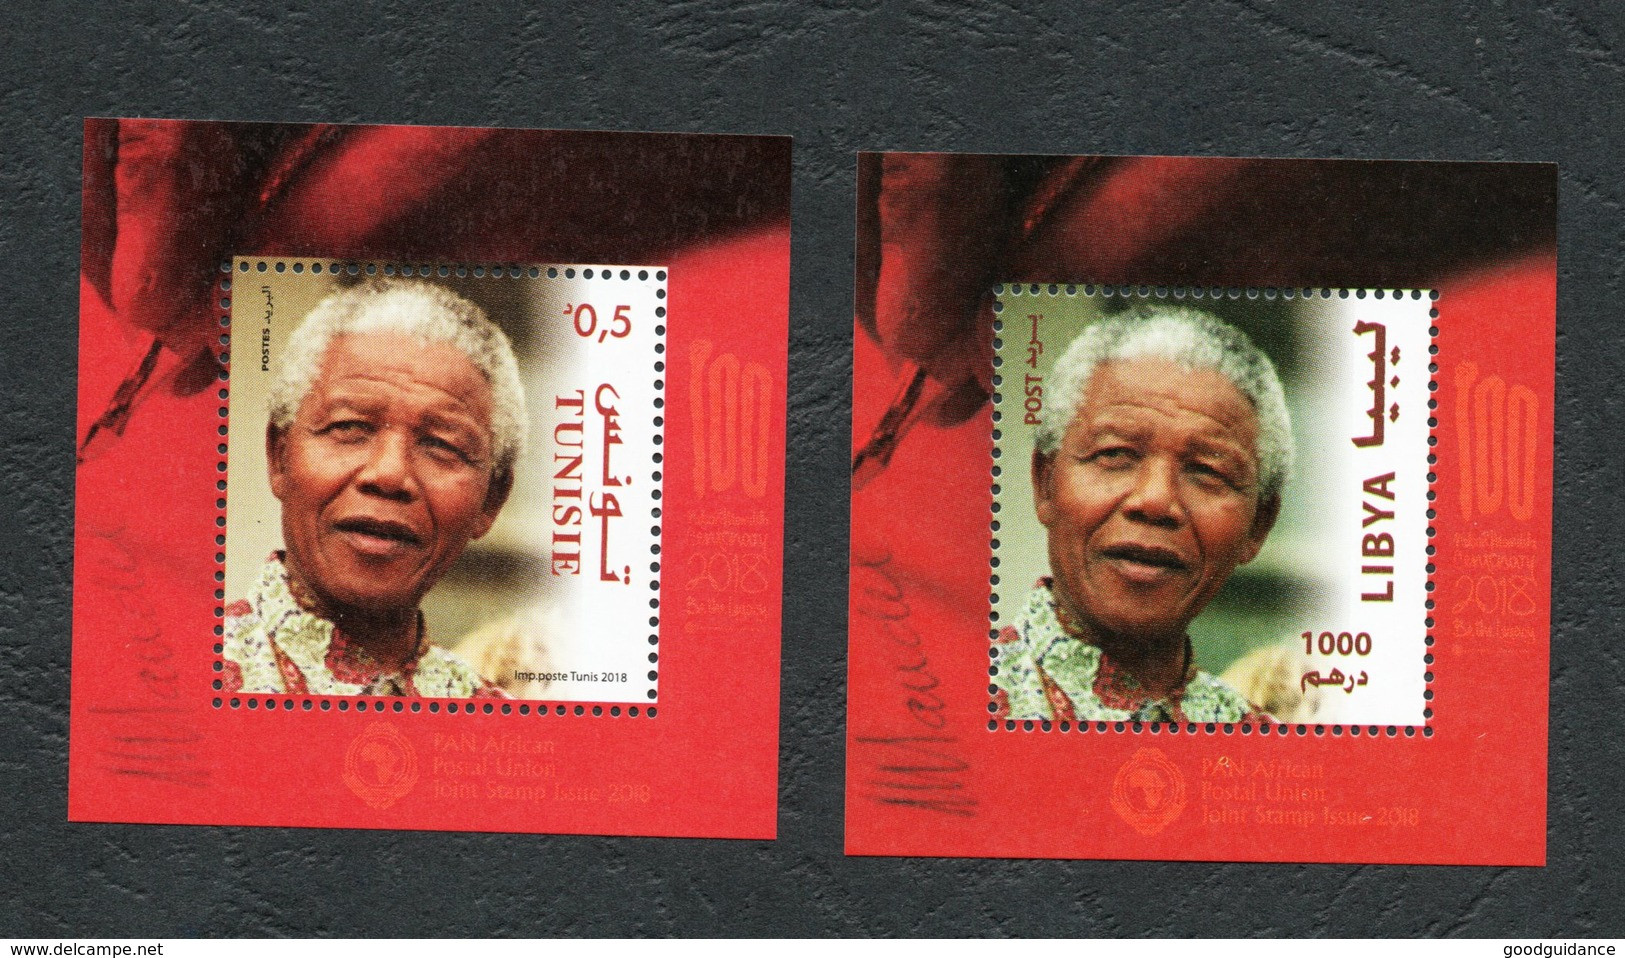 2018- Libya- Tunisia- South Africa - Centenary Of Nelson Mandela-Join Issue-2 Perforated Blocks MNH** - Ungebraucht